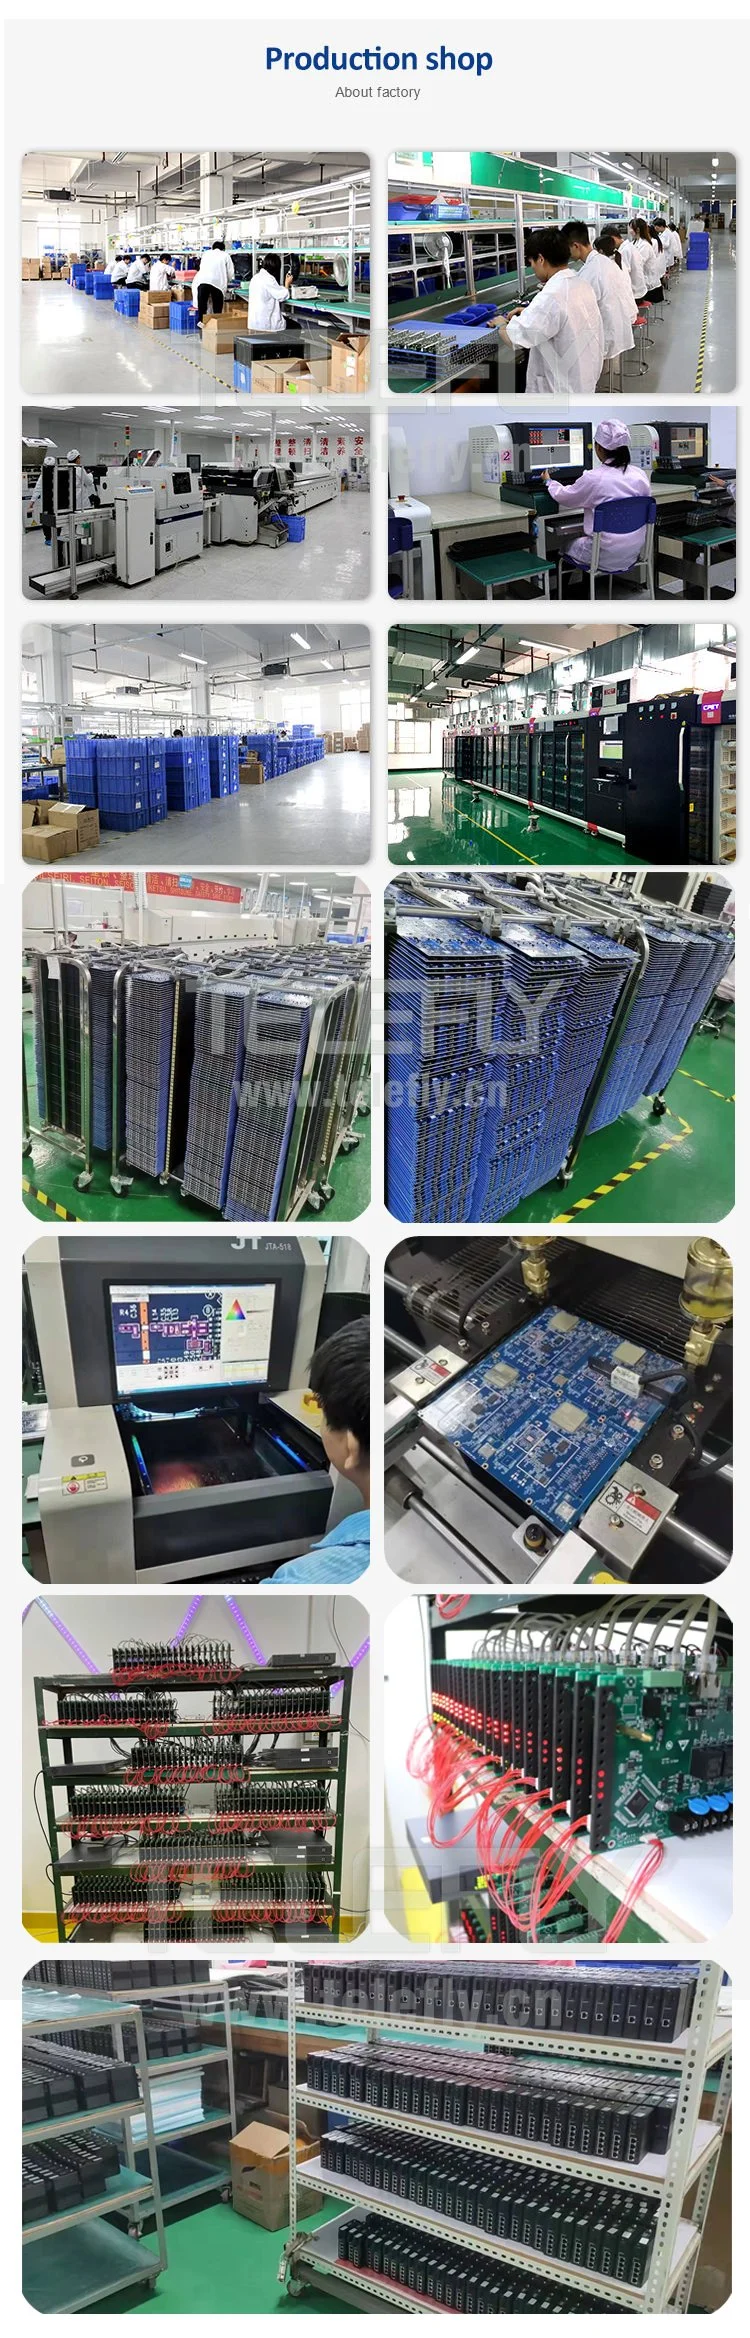 New Original Electronic Components IC Chips Xilinx Xc6slx9-2tqg144c Fpga Spartan-6 Lx Family 9152 Cells 45nm (CMOS) Technology 1.2V 144-Pin Tqfp in Stock